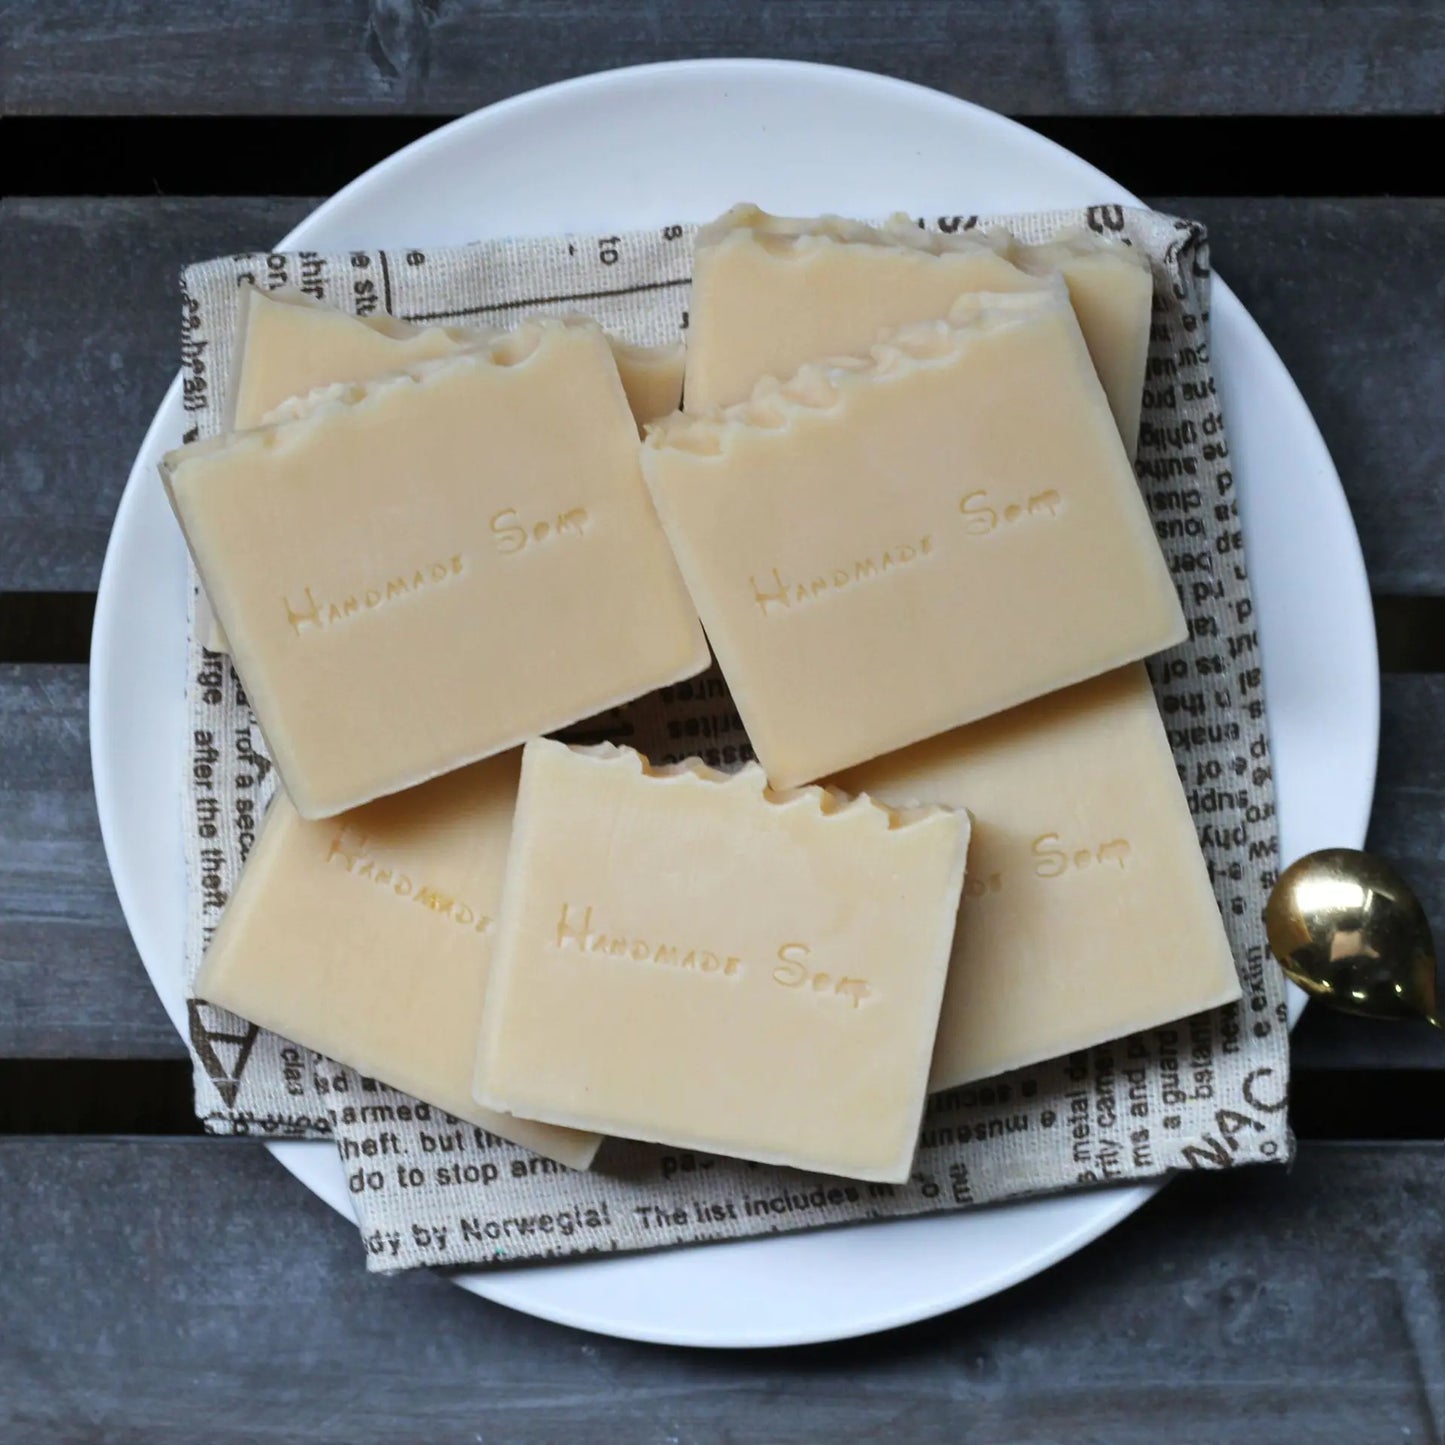 Milk Honey Natural Handmade Soap